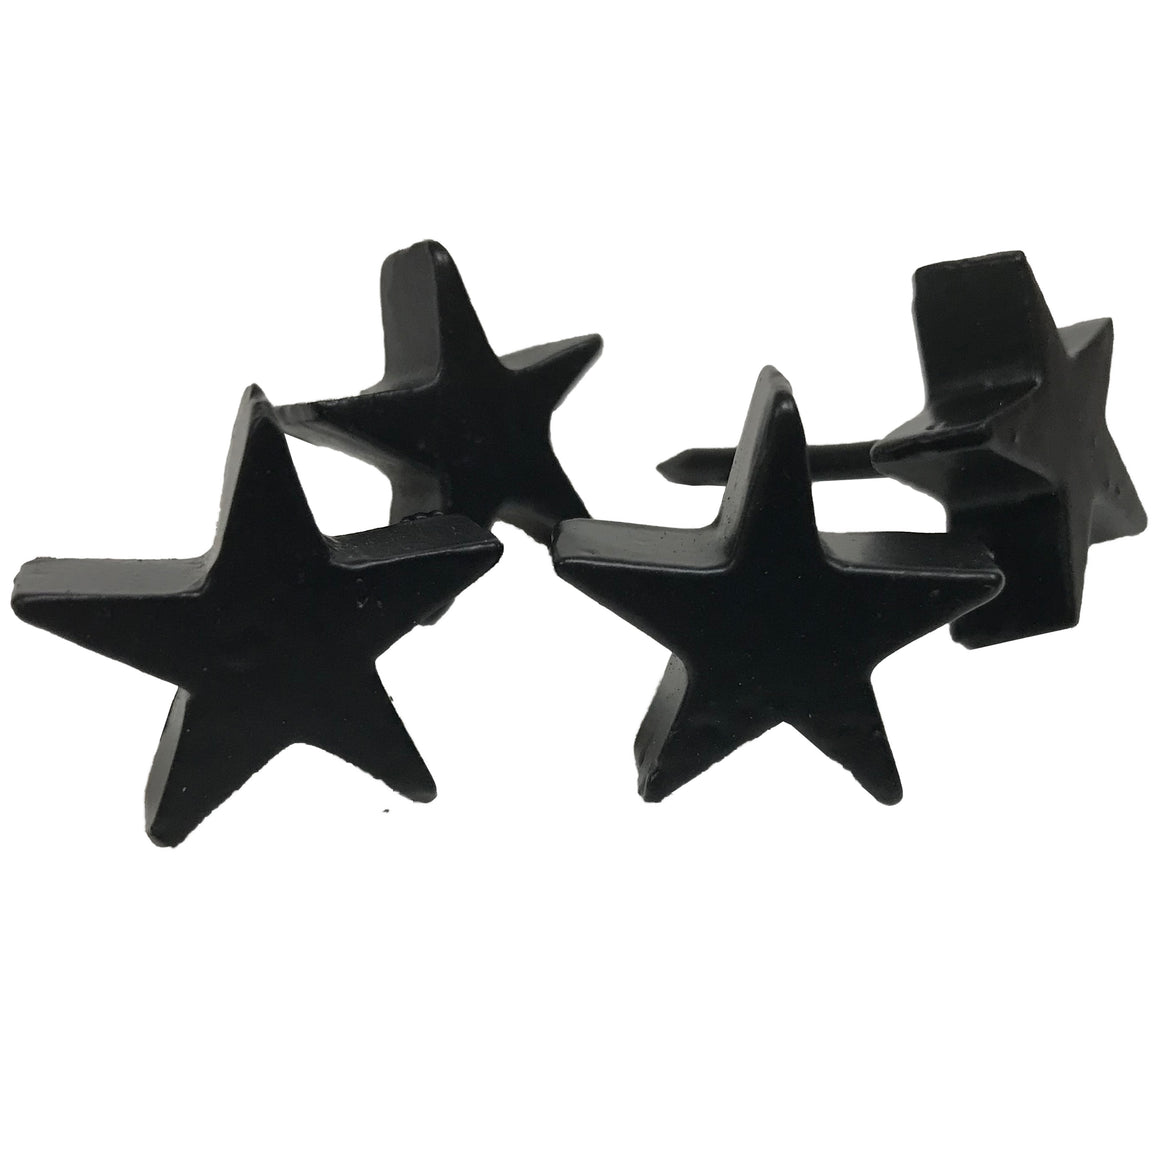 STAR Head Clavos nails - 1.5" x 1.5"